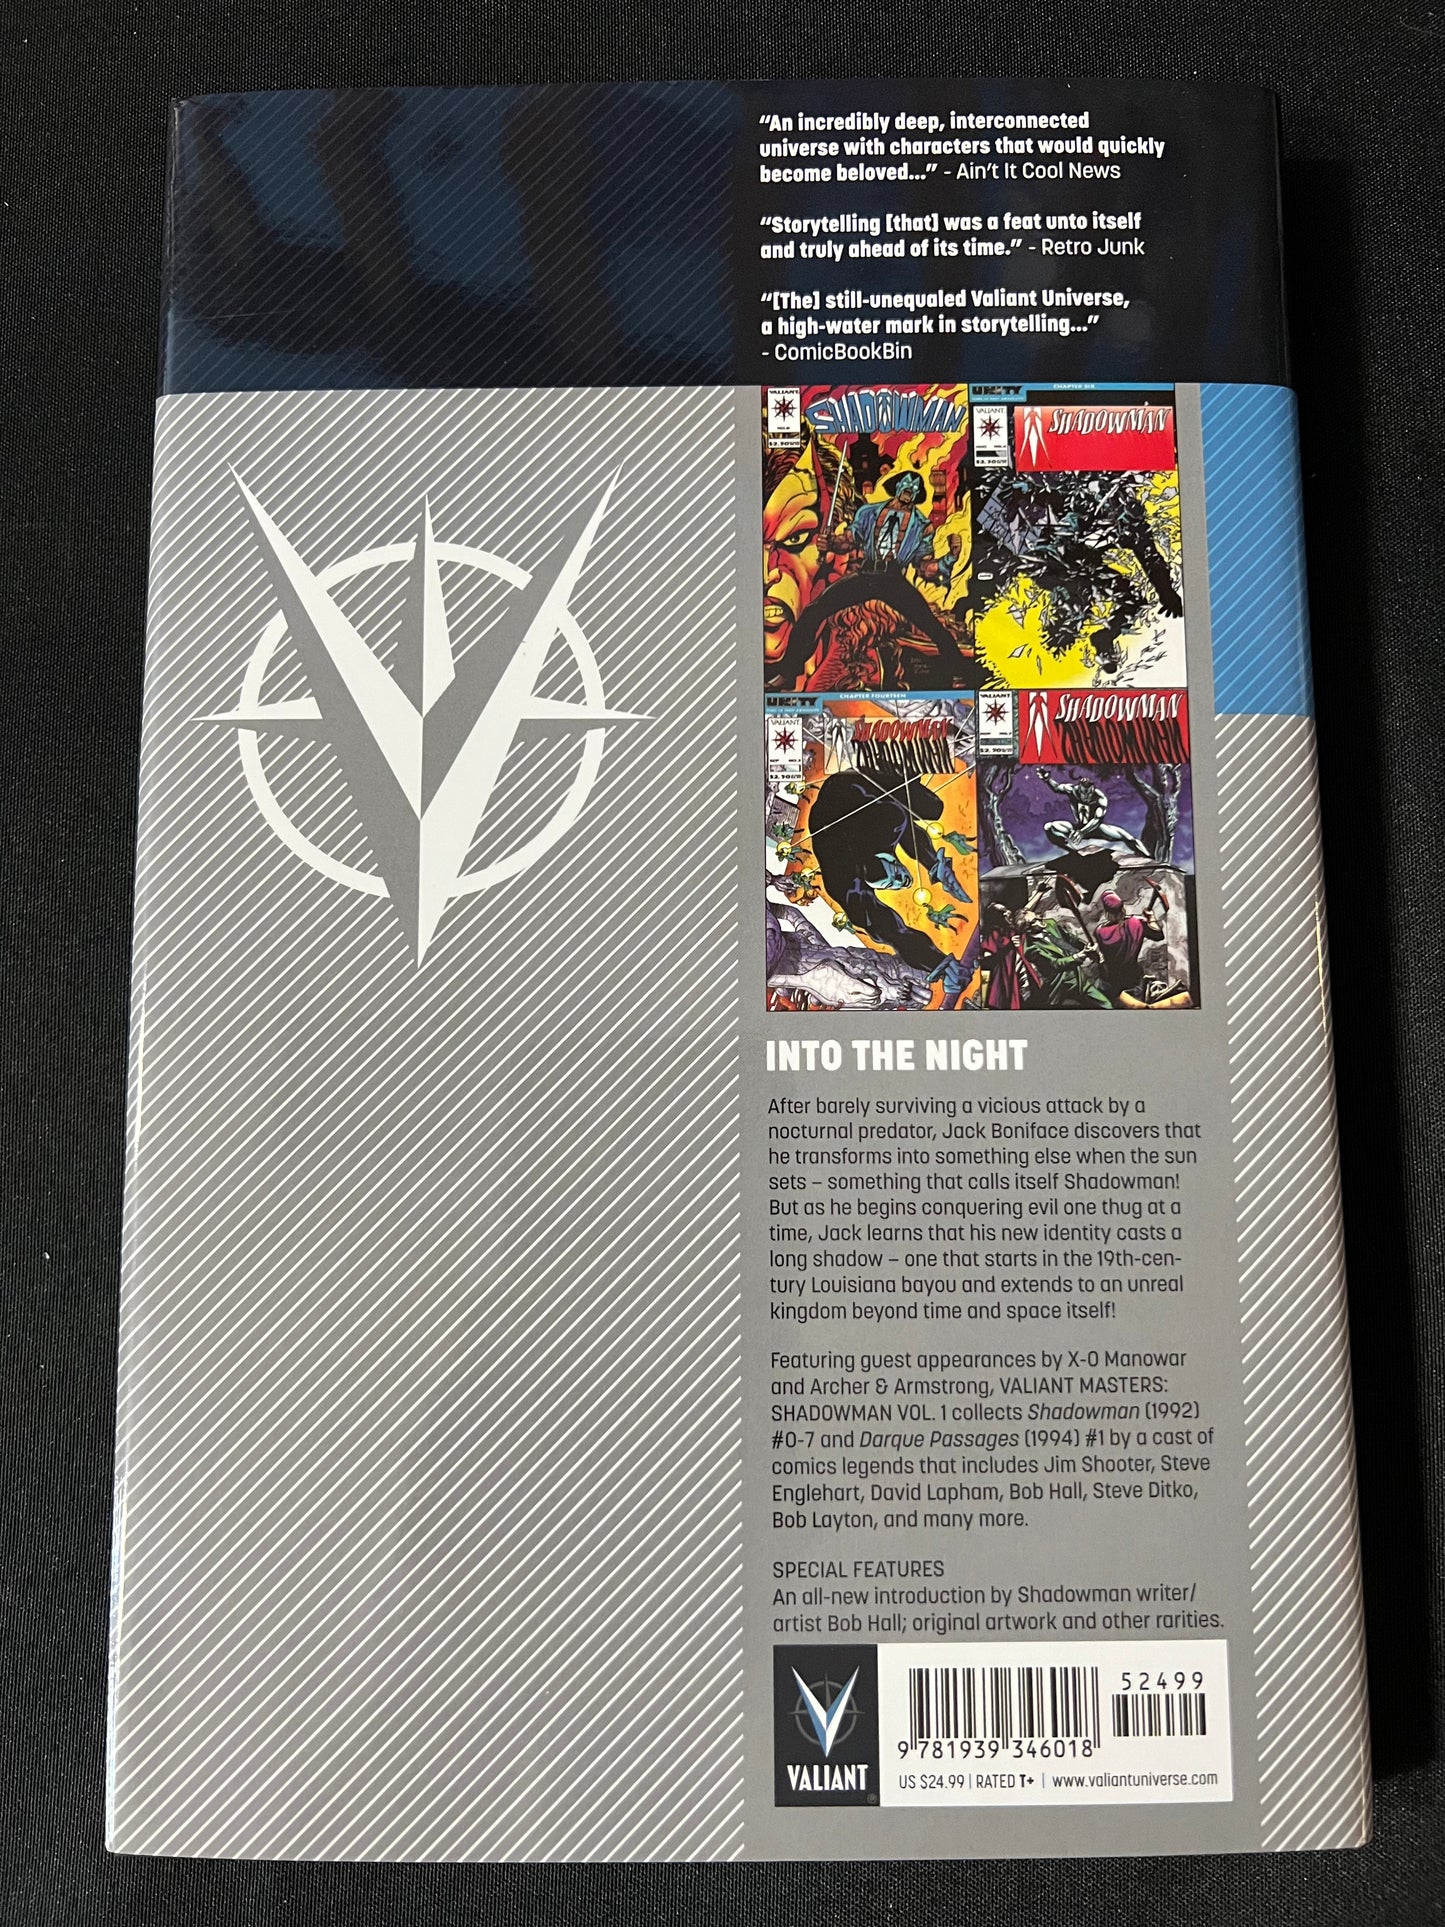 Valiant Masters x6 Hardcover Graphic Novel Collection (Shadowman, Bloodshot, Rai, Ninjak)